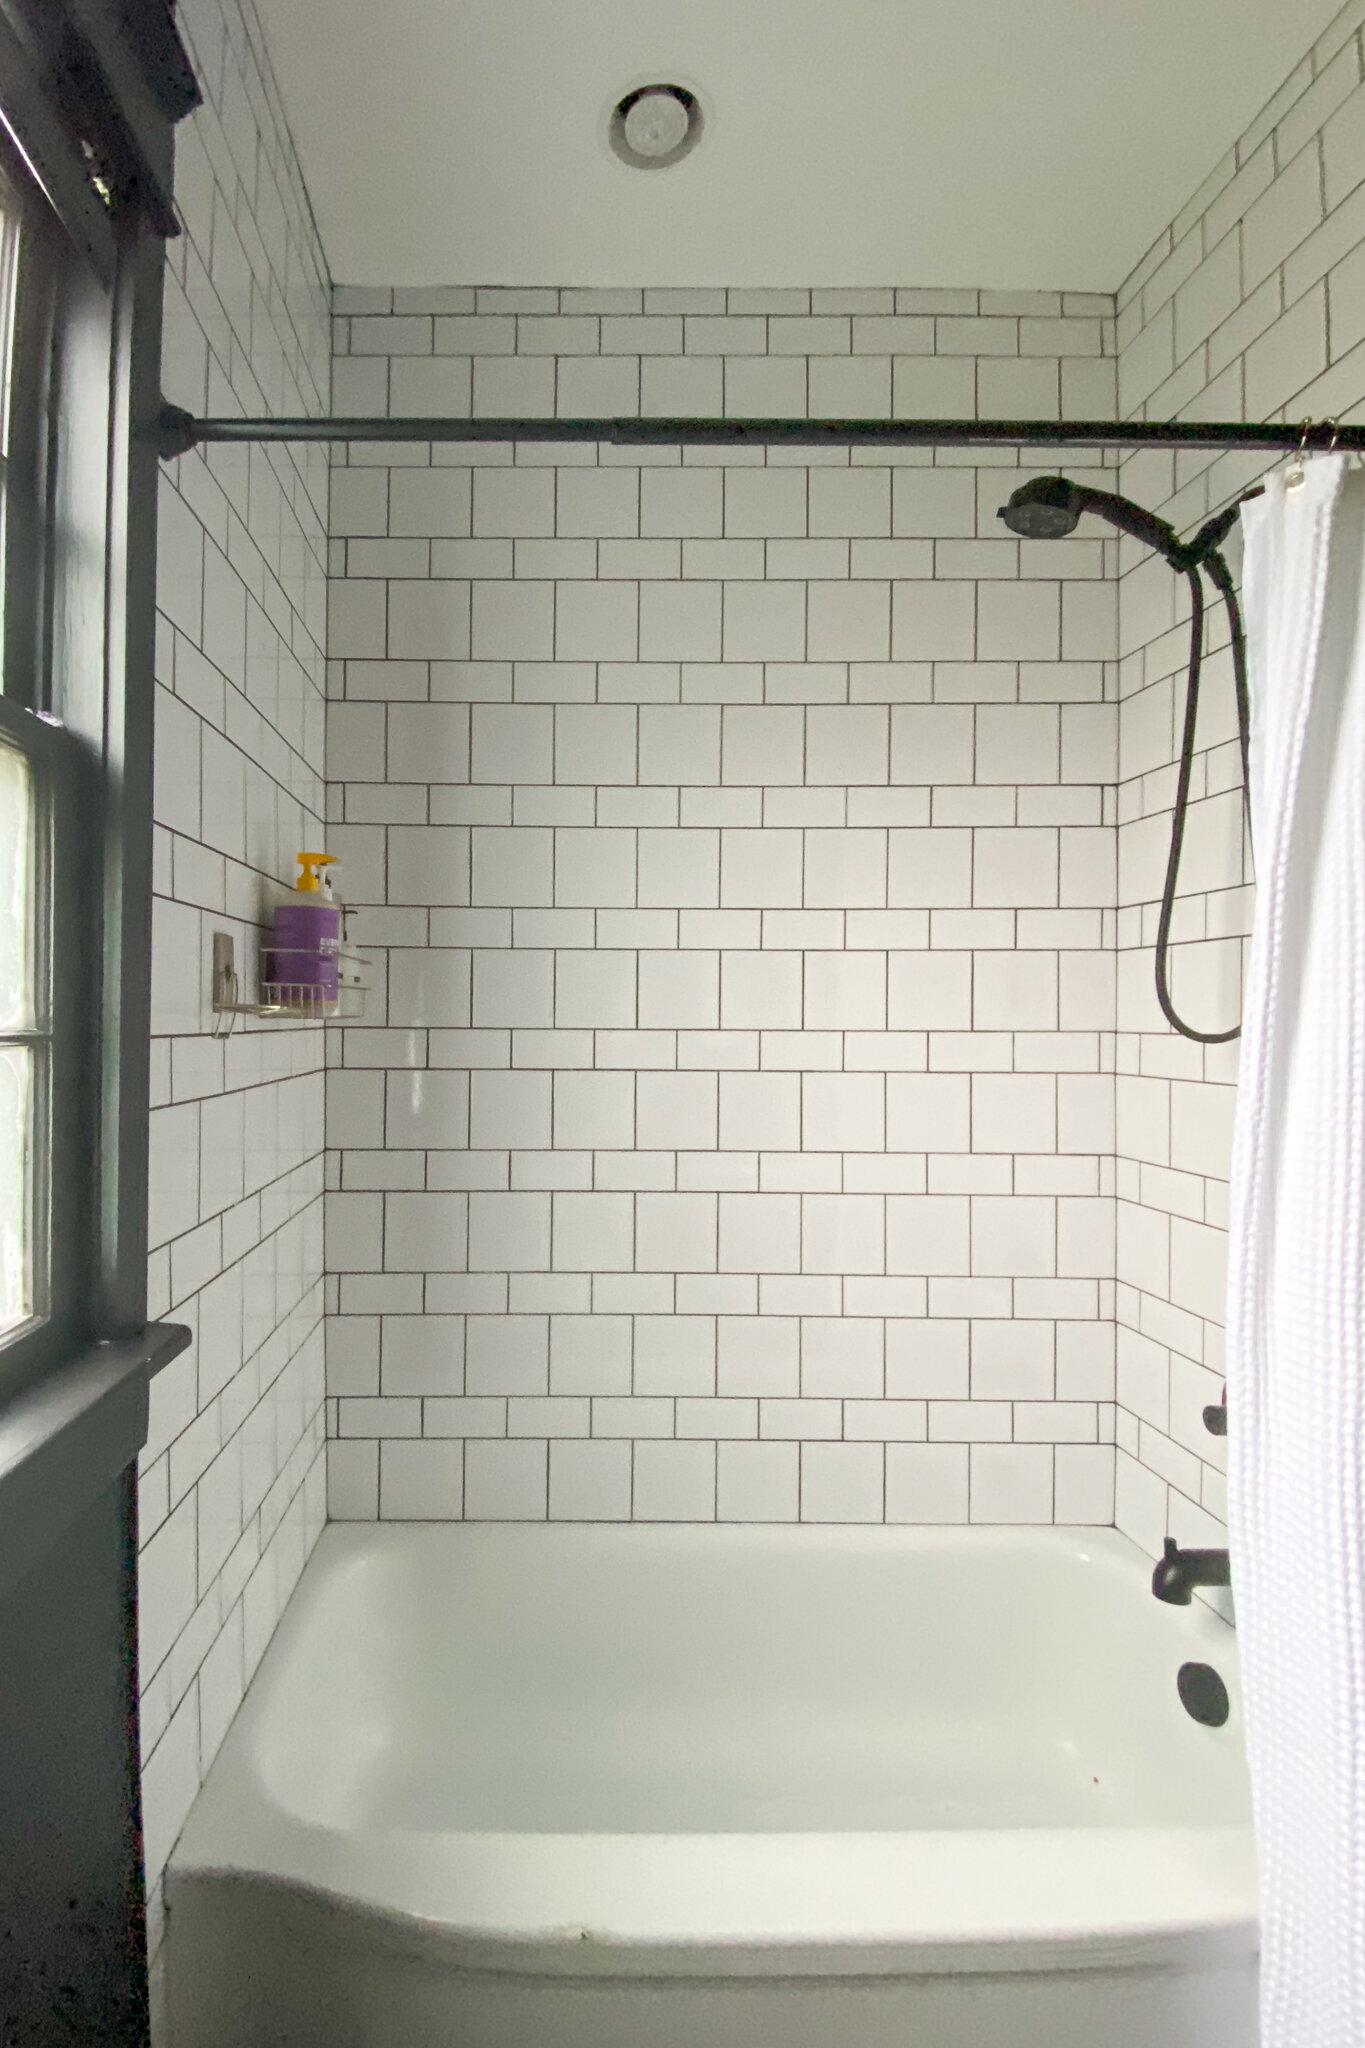 Historic Bathroom Tile Designs Orc, Shower Bathtub Tile Ideas